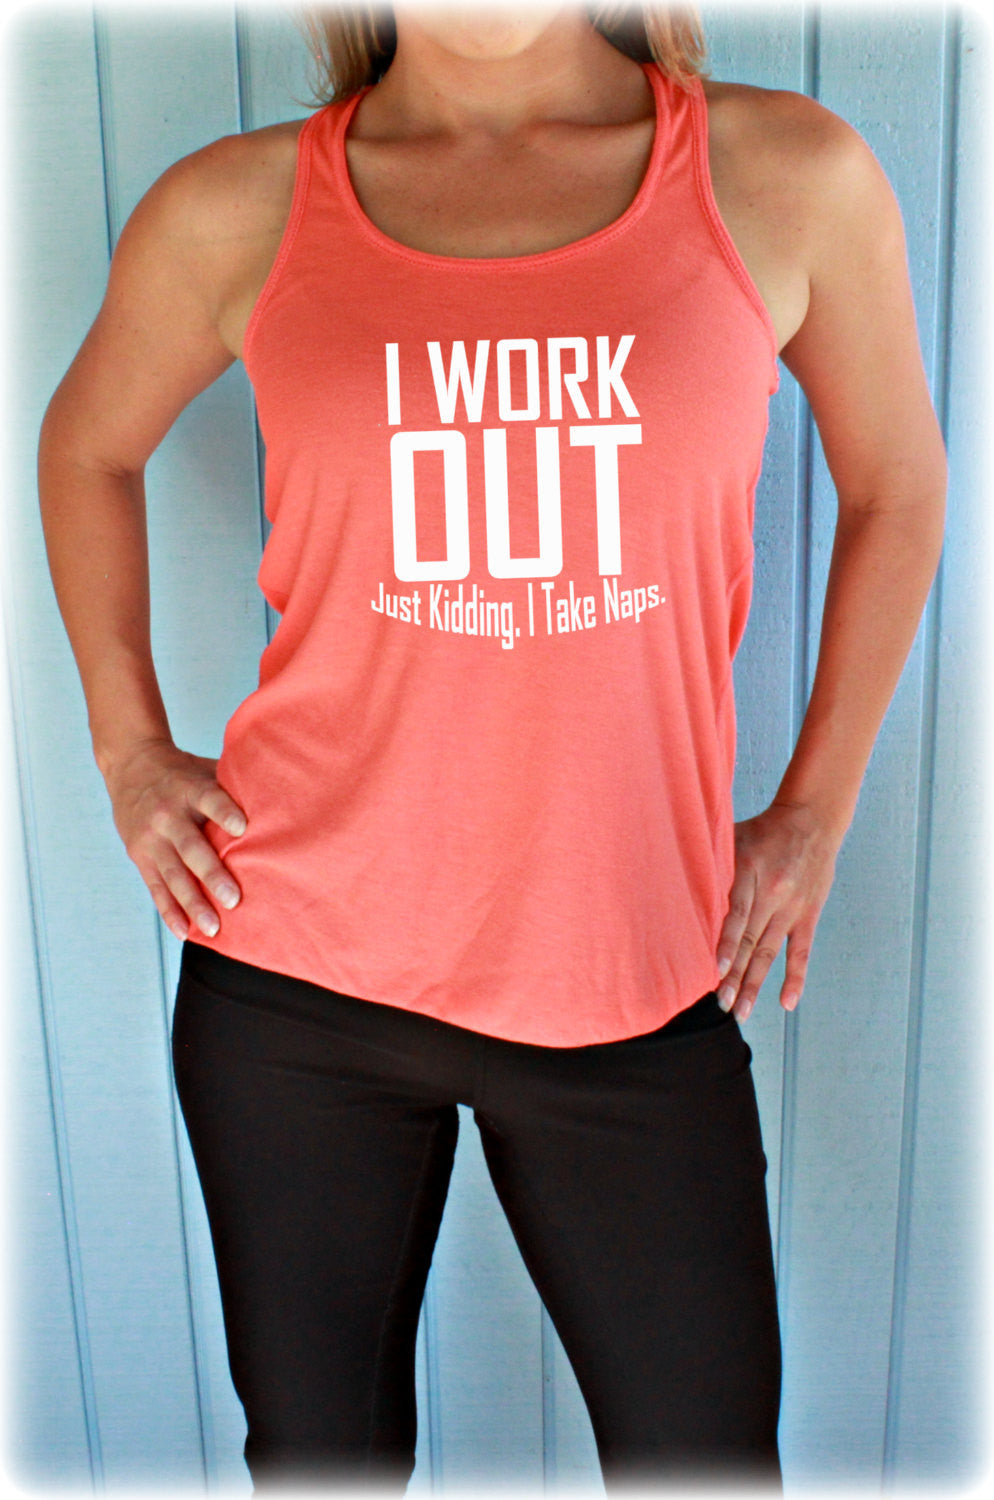 Womens Motivational Workout Tank Top. Fitness Motivation. I Workout. Just Kidding I Take Naps. Workout Clothing.